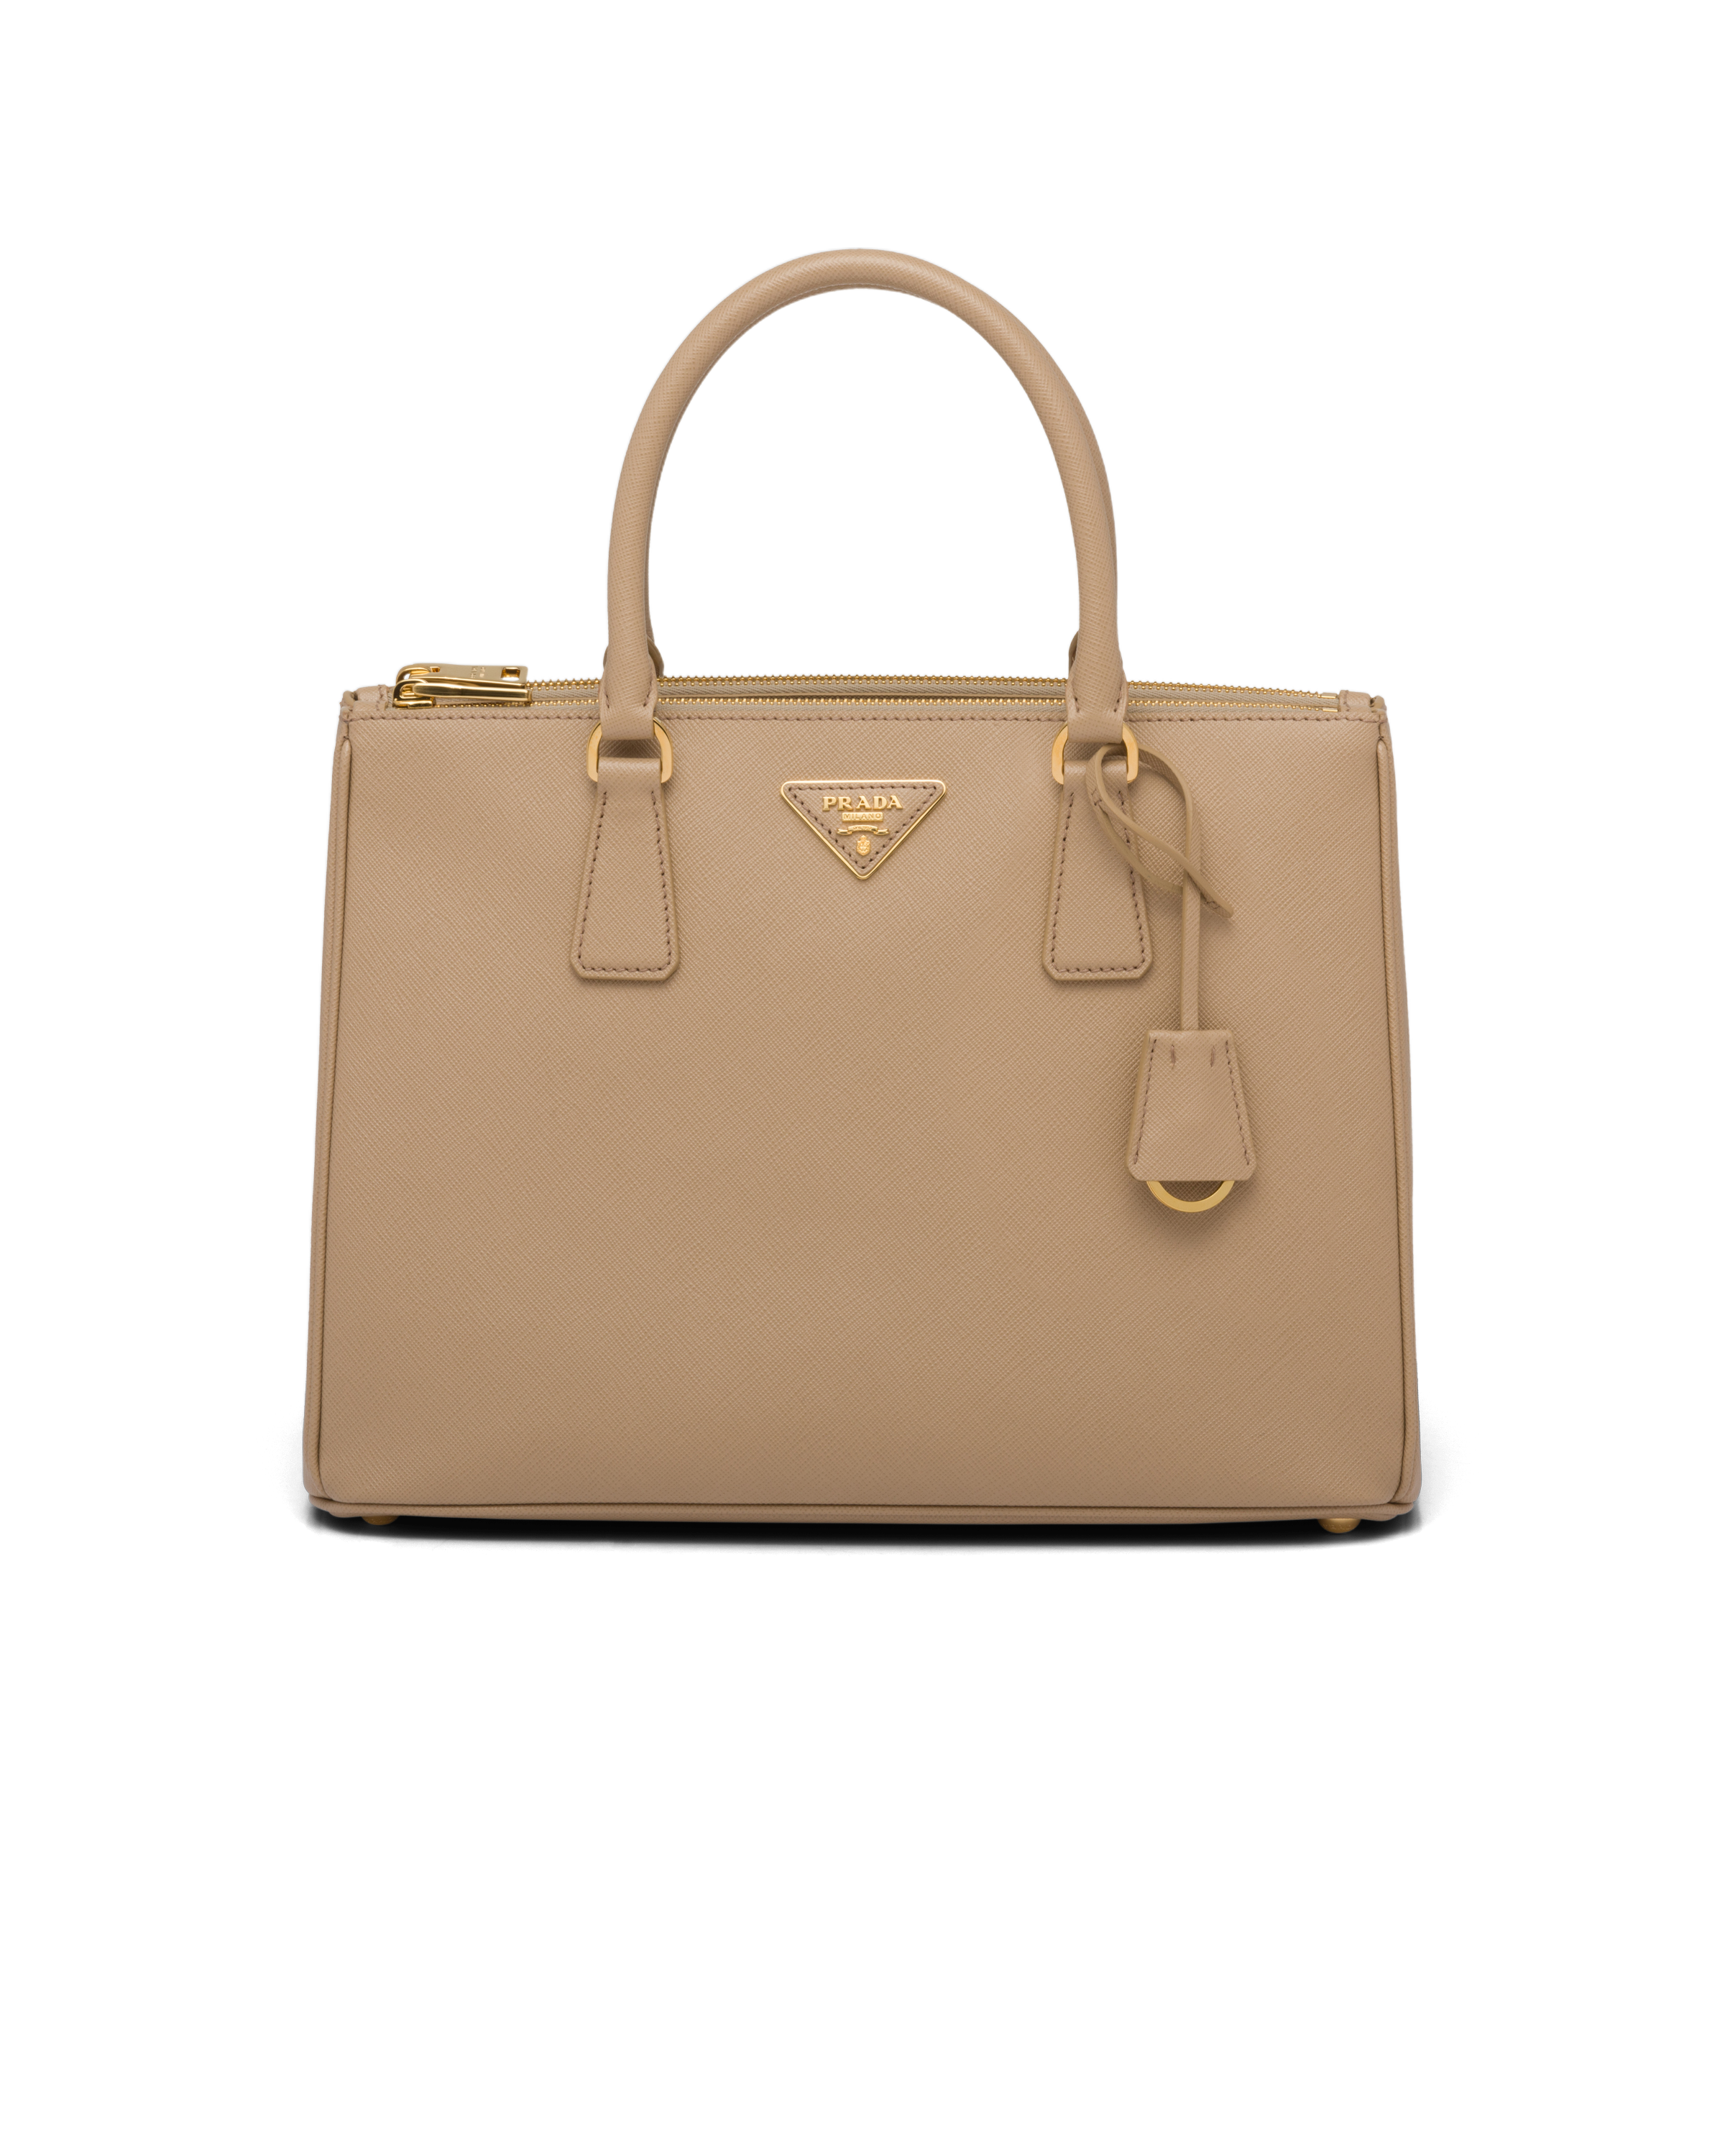 1BA274 NZV F0016 Prada Women's Saffiano Leather Handbag